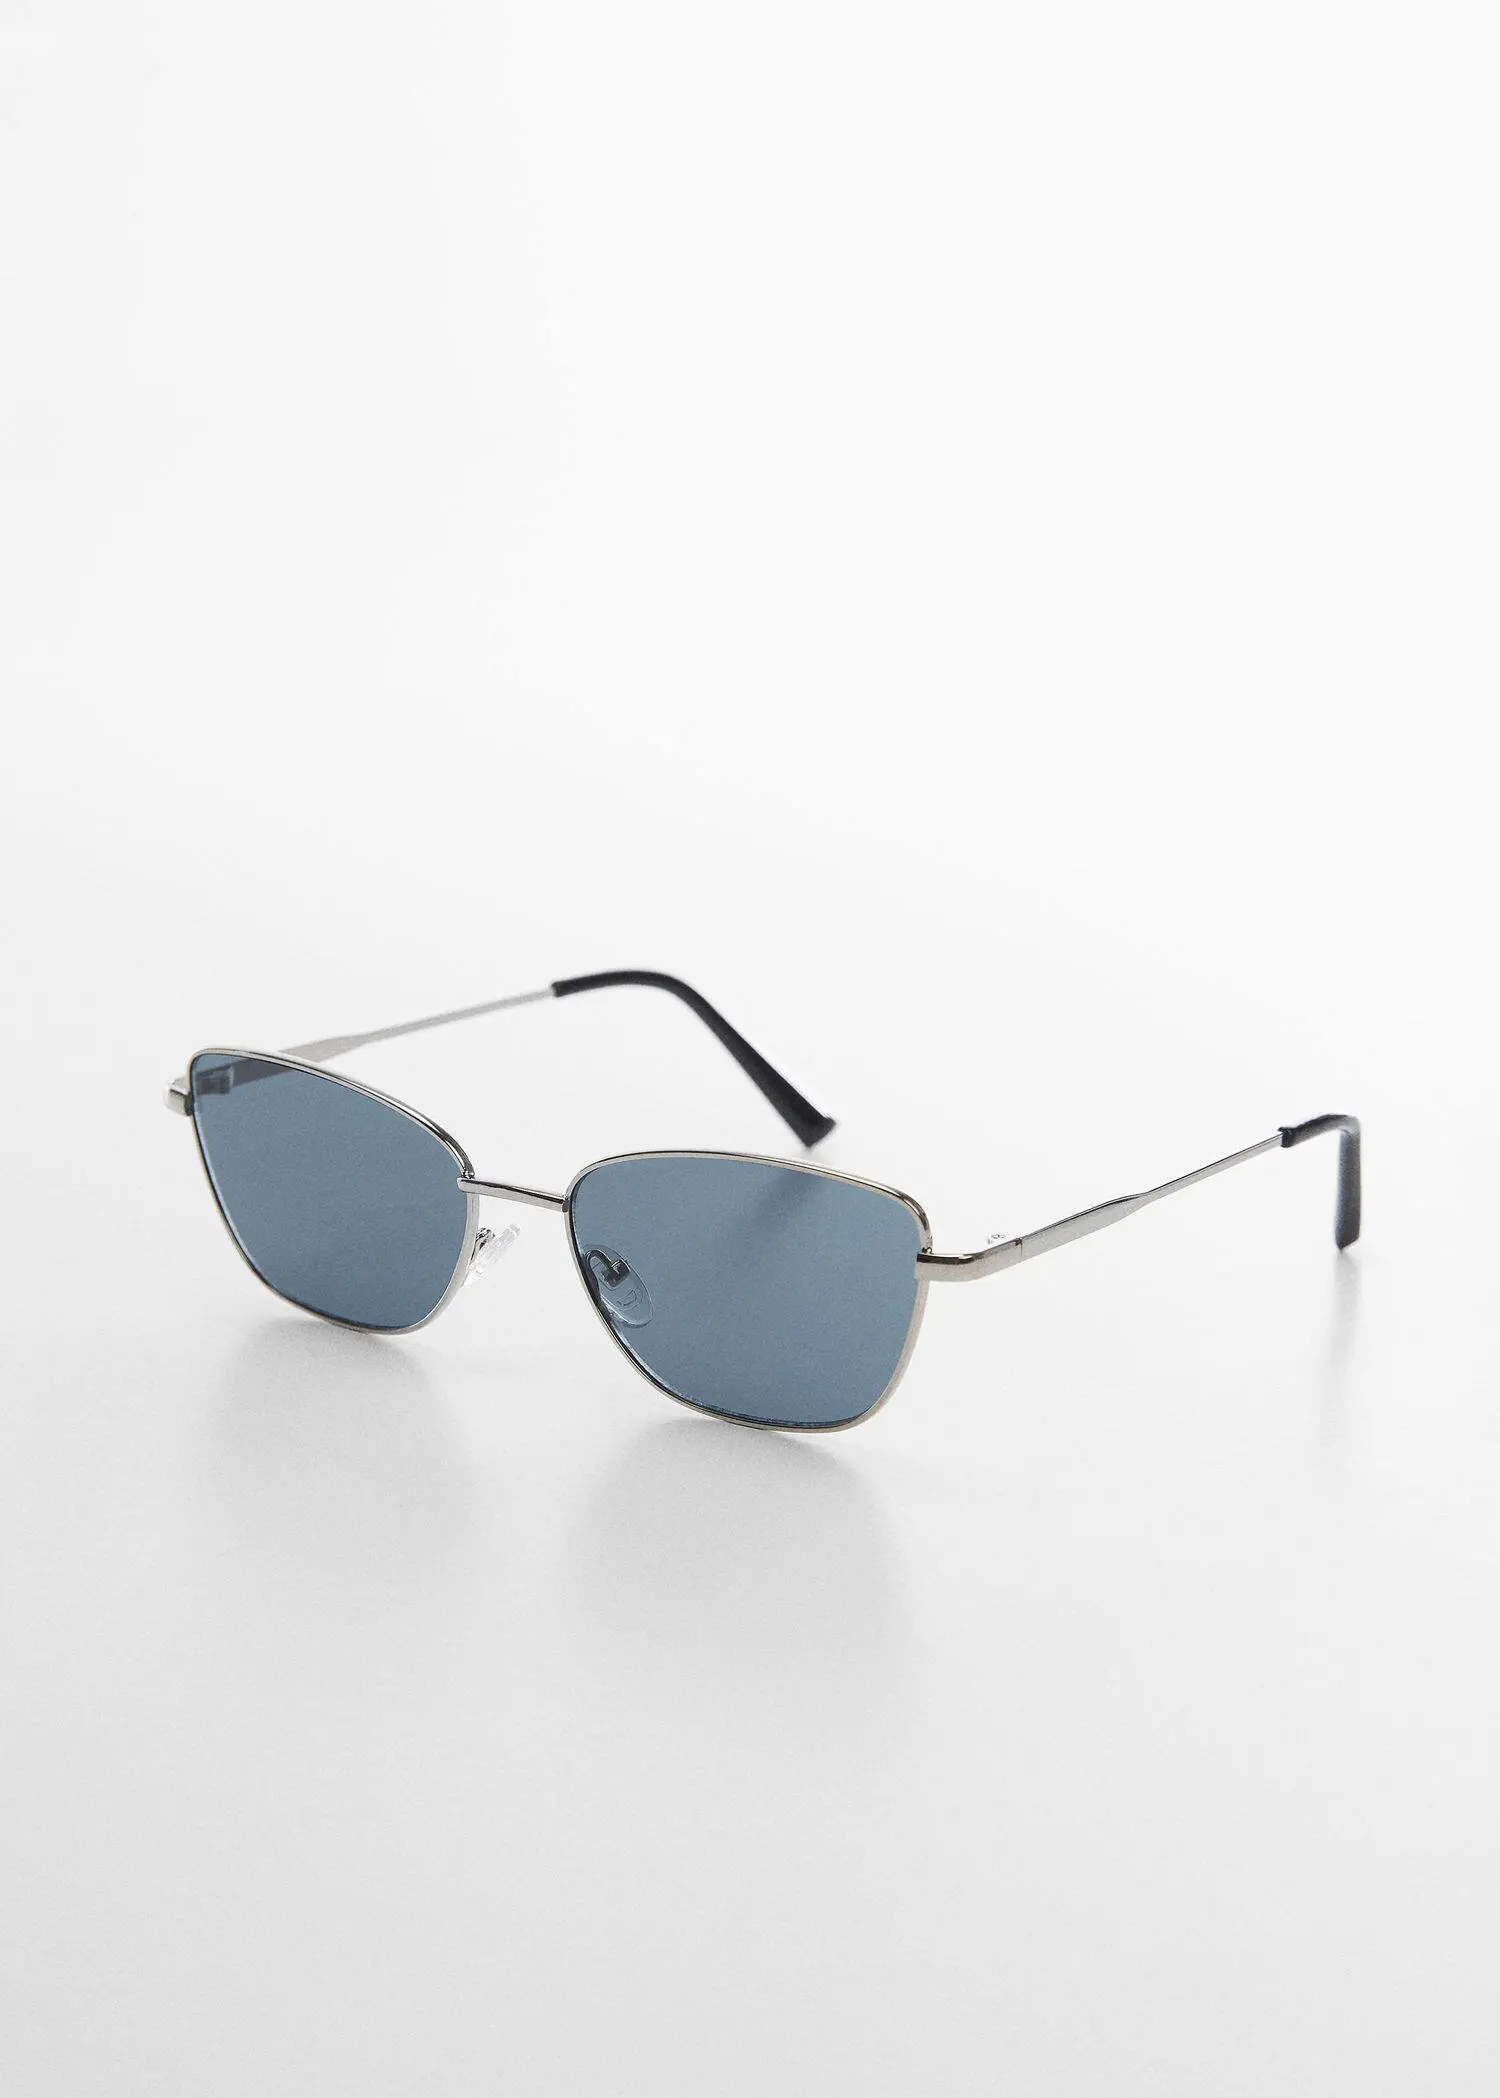 Mango Metal bridge sunglasses. a pair of sunglasses on a white surface. 